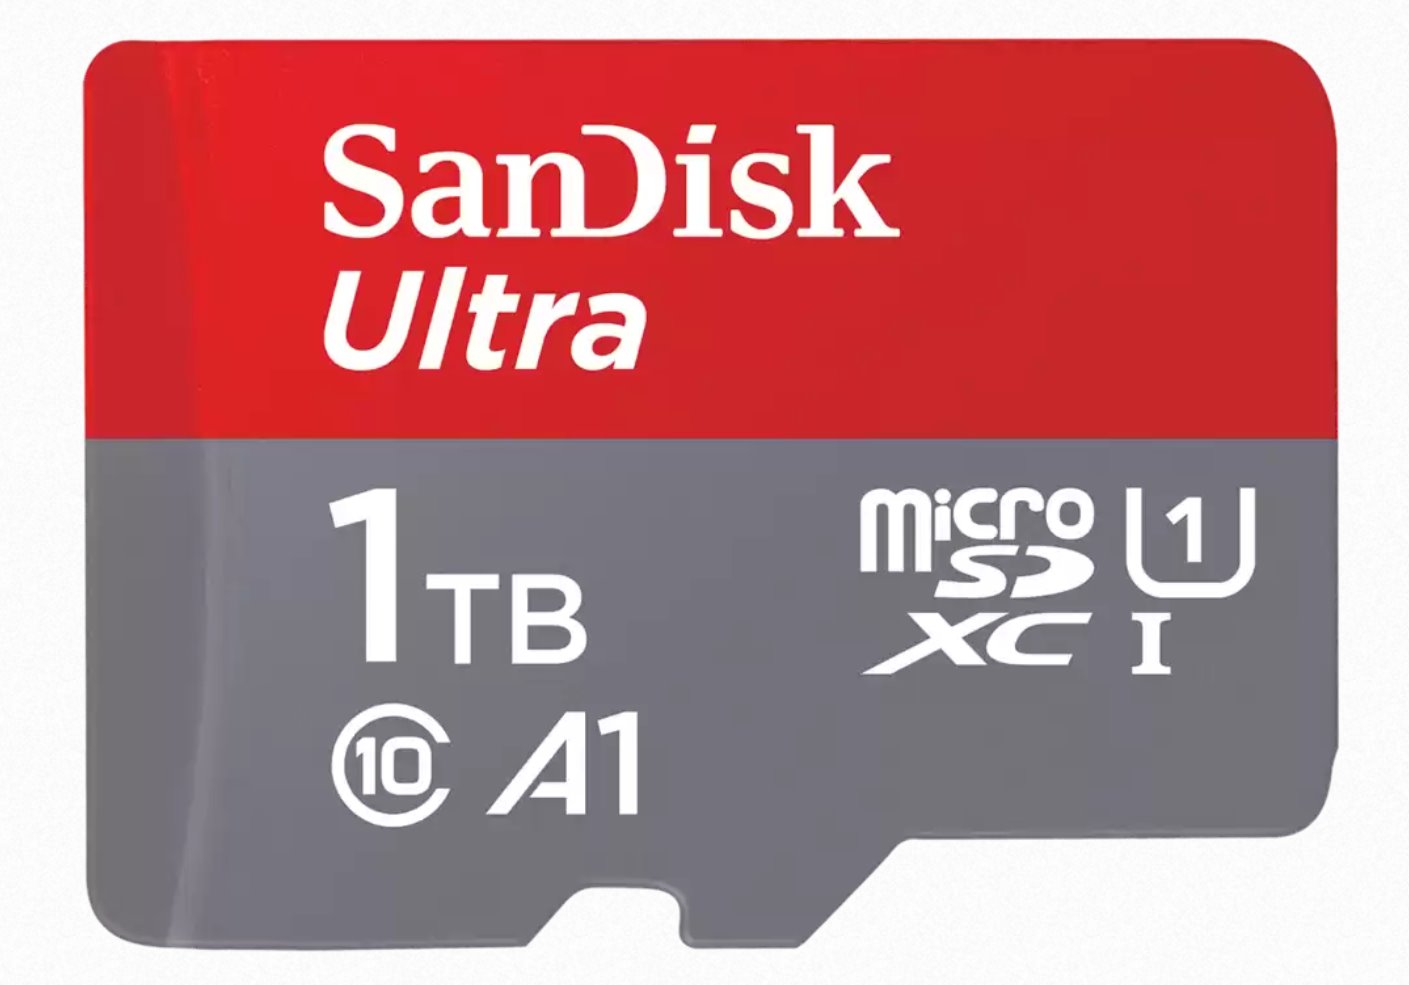 SanDisk Ultra 1TB microSD card